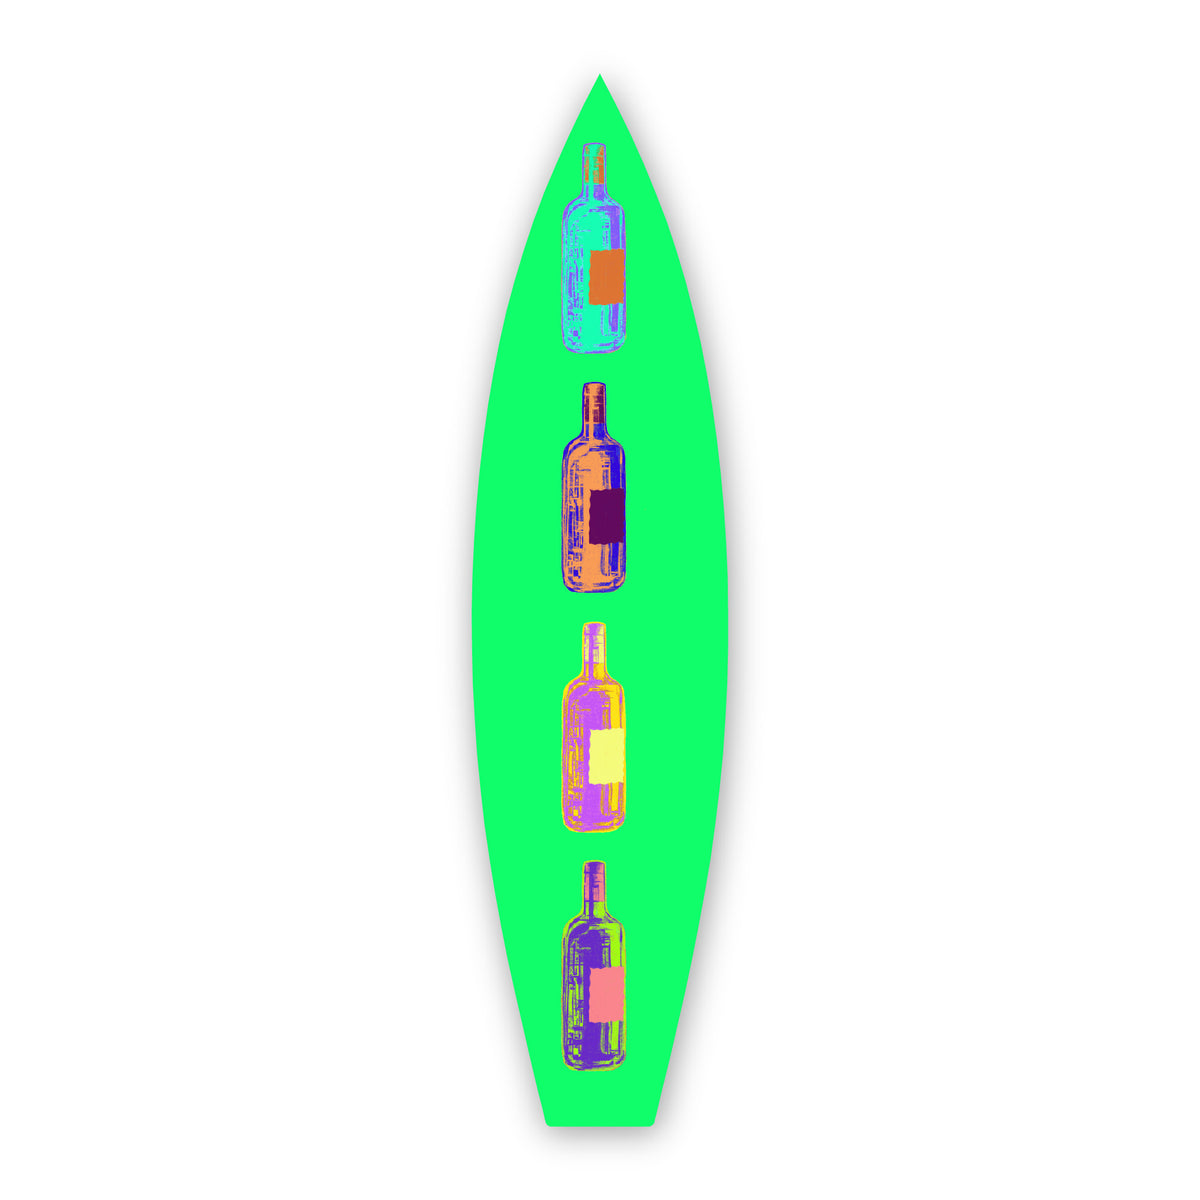 Retro Bottles - Surfboard Art